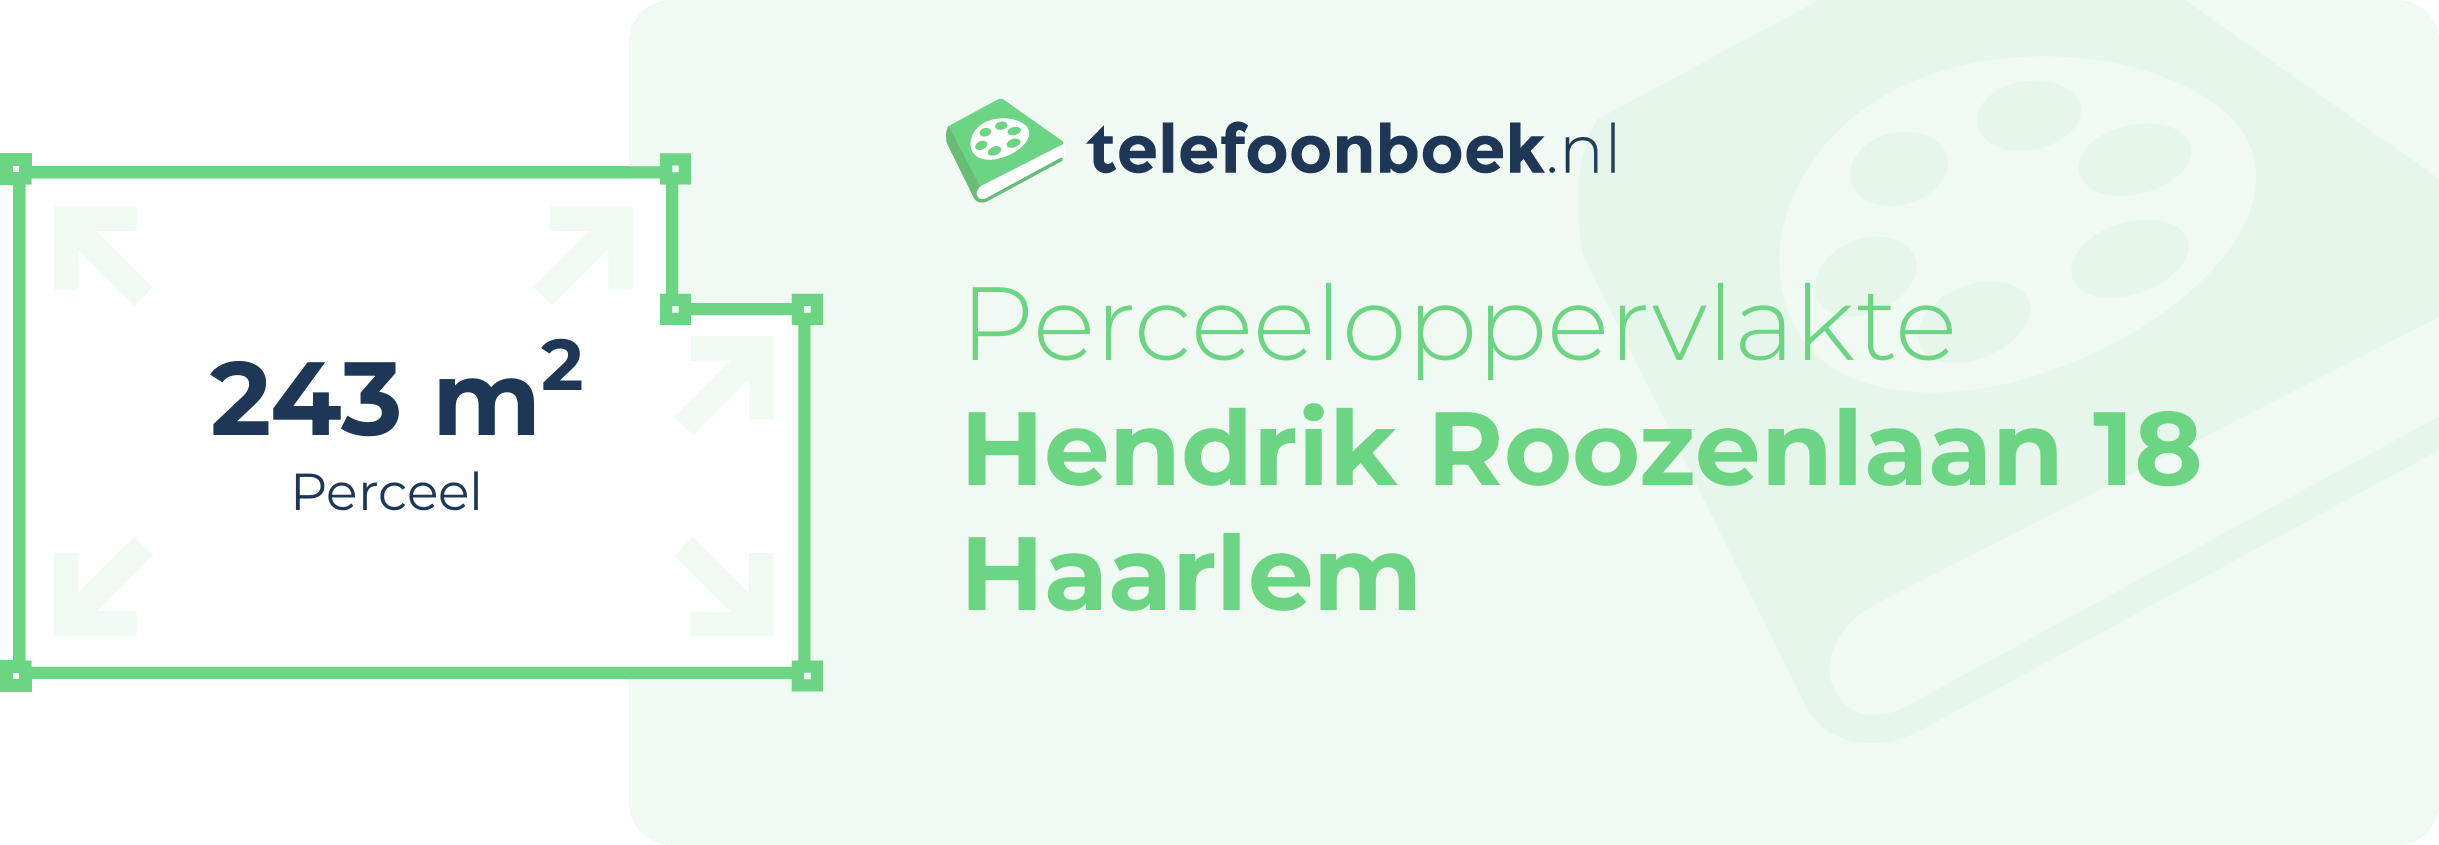 Perceeloppervlakte Hendrik Roozenlaan 18 Haarlem